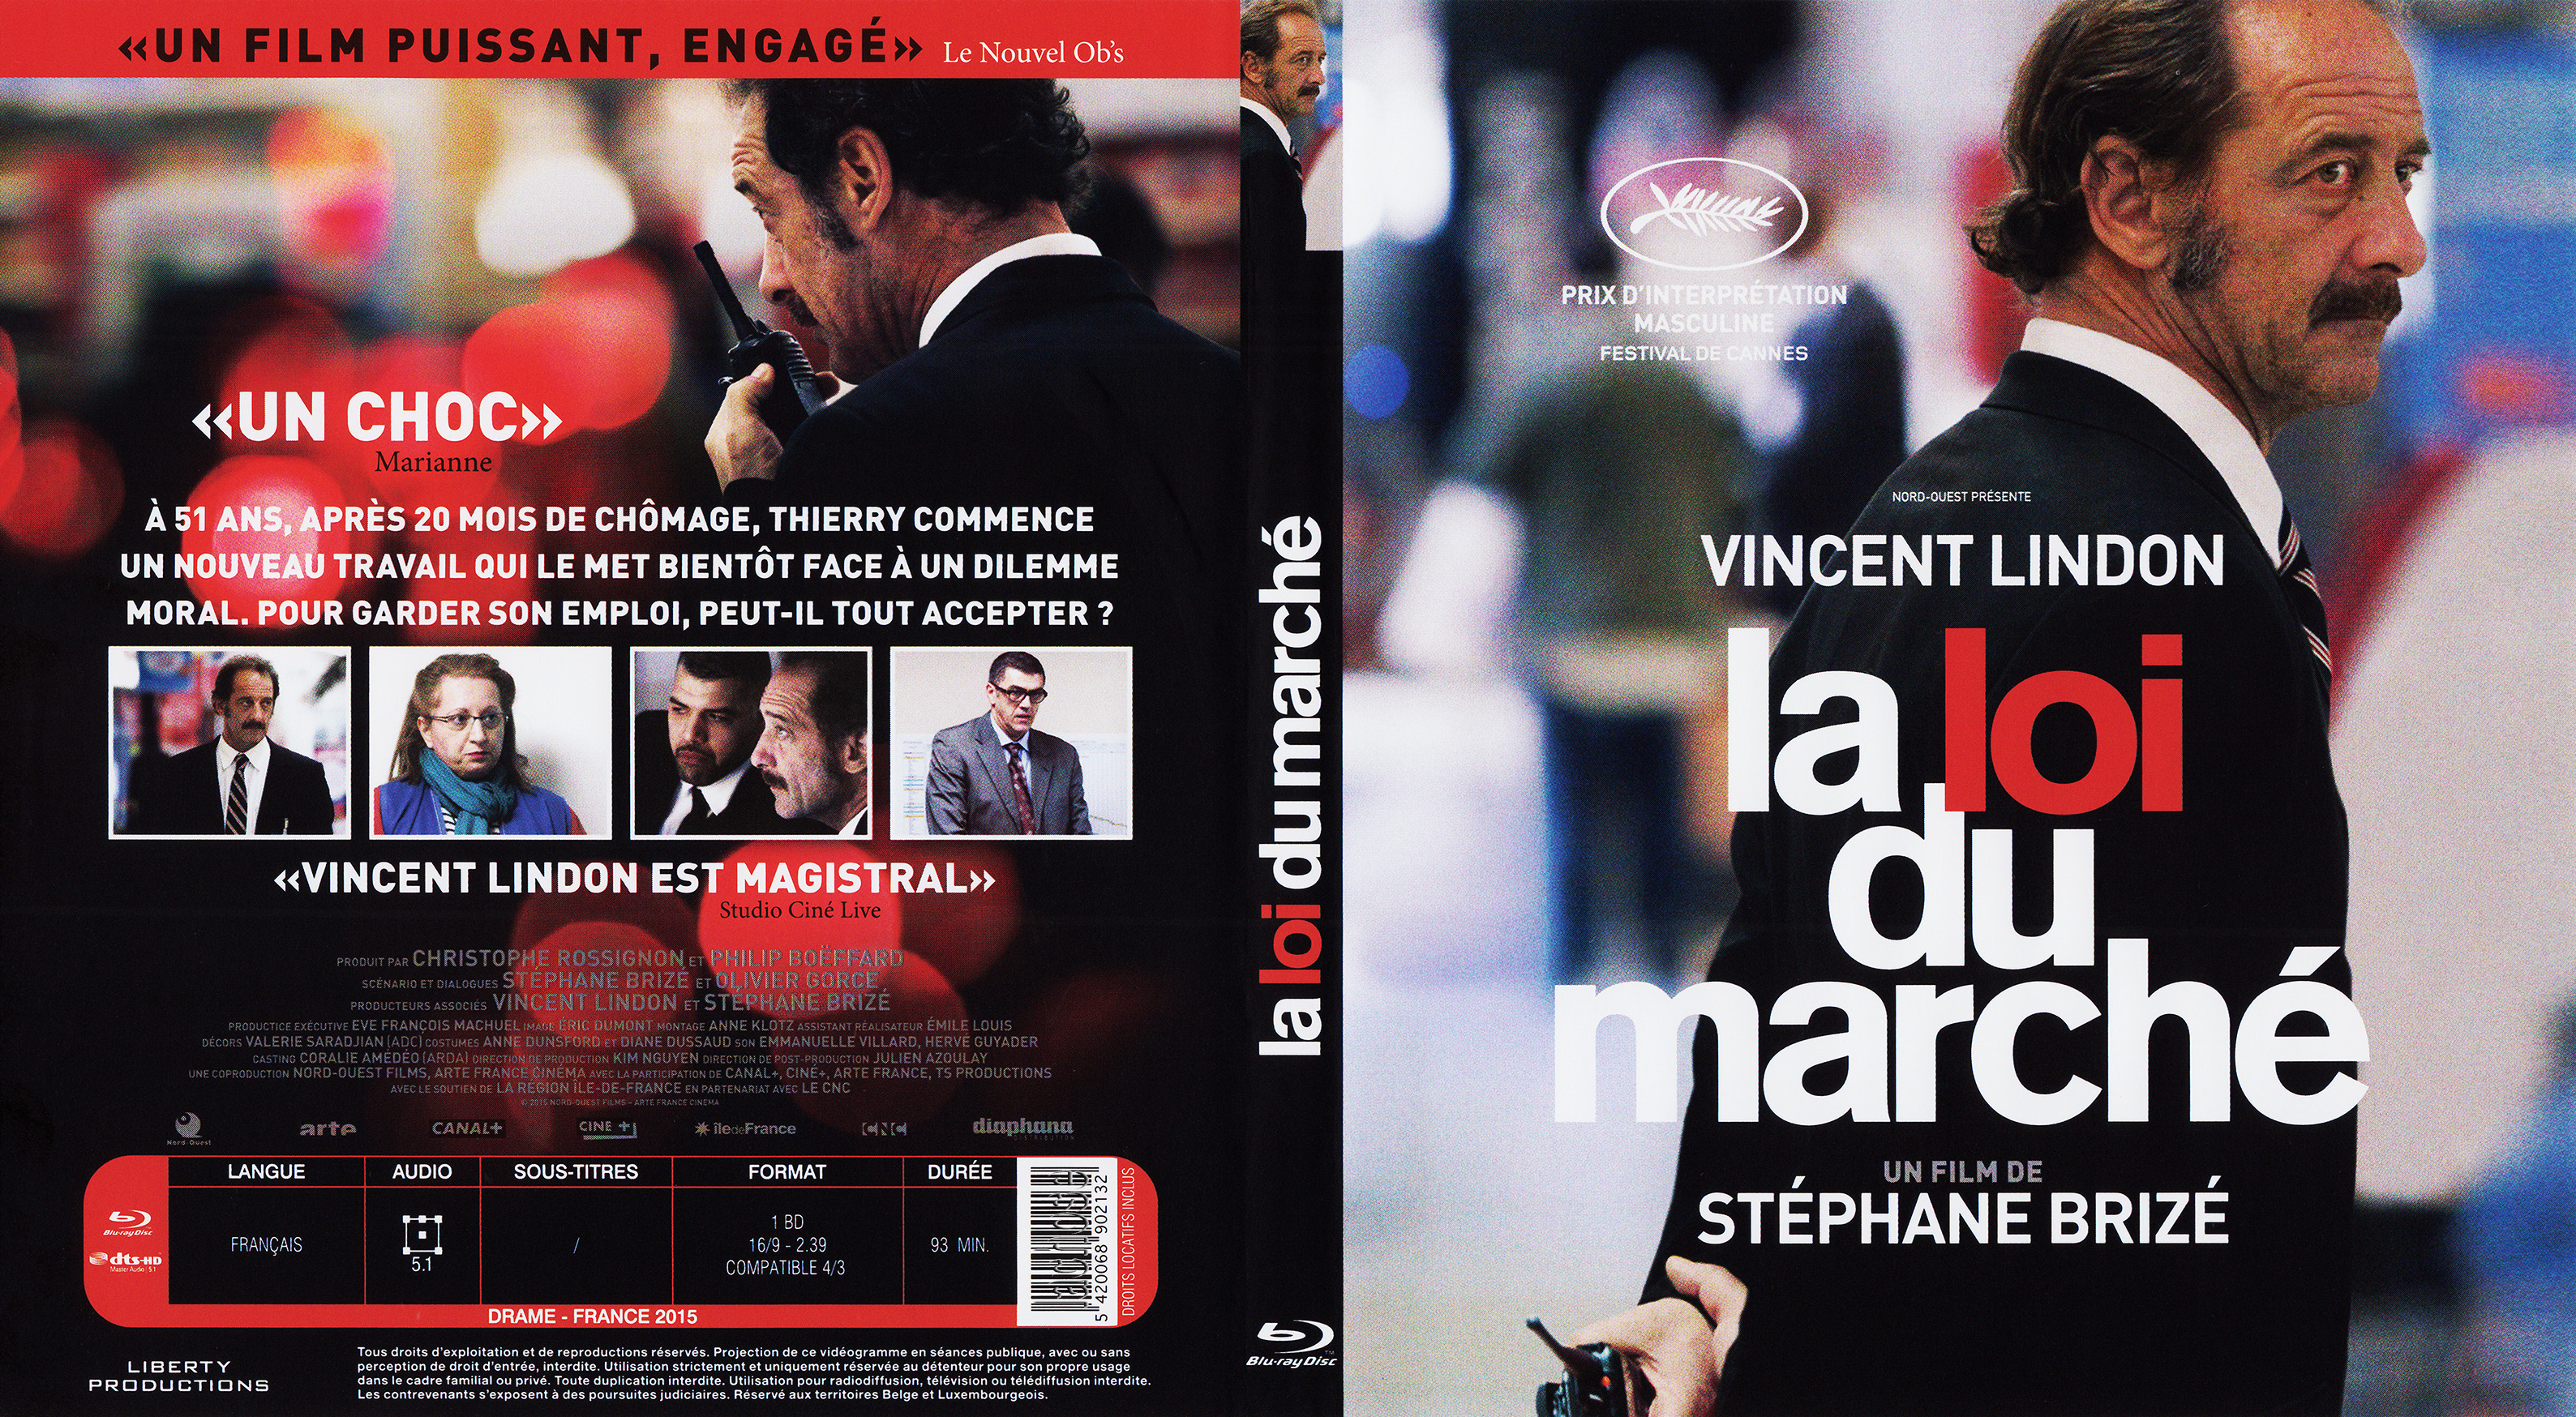 Jaquette DVD La loi du march (BLU-RAY)